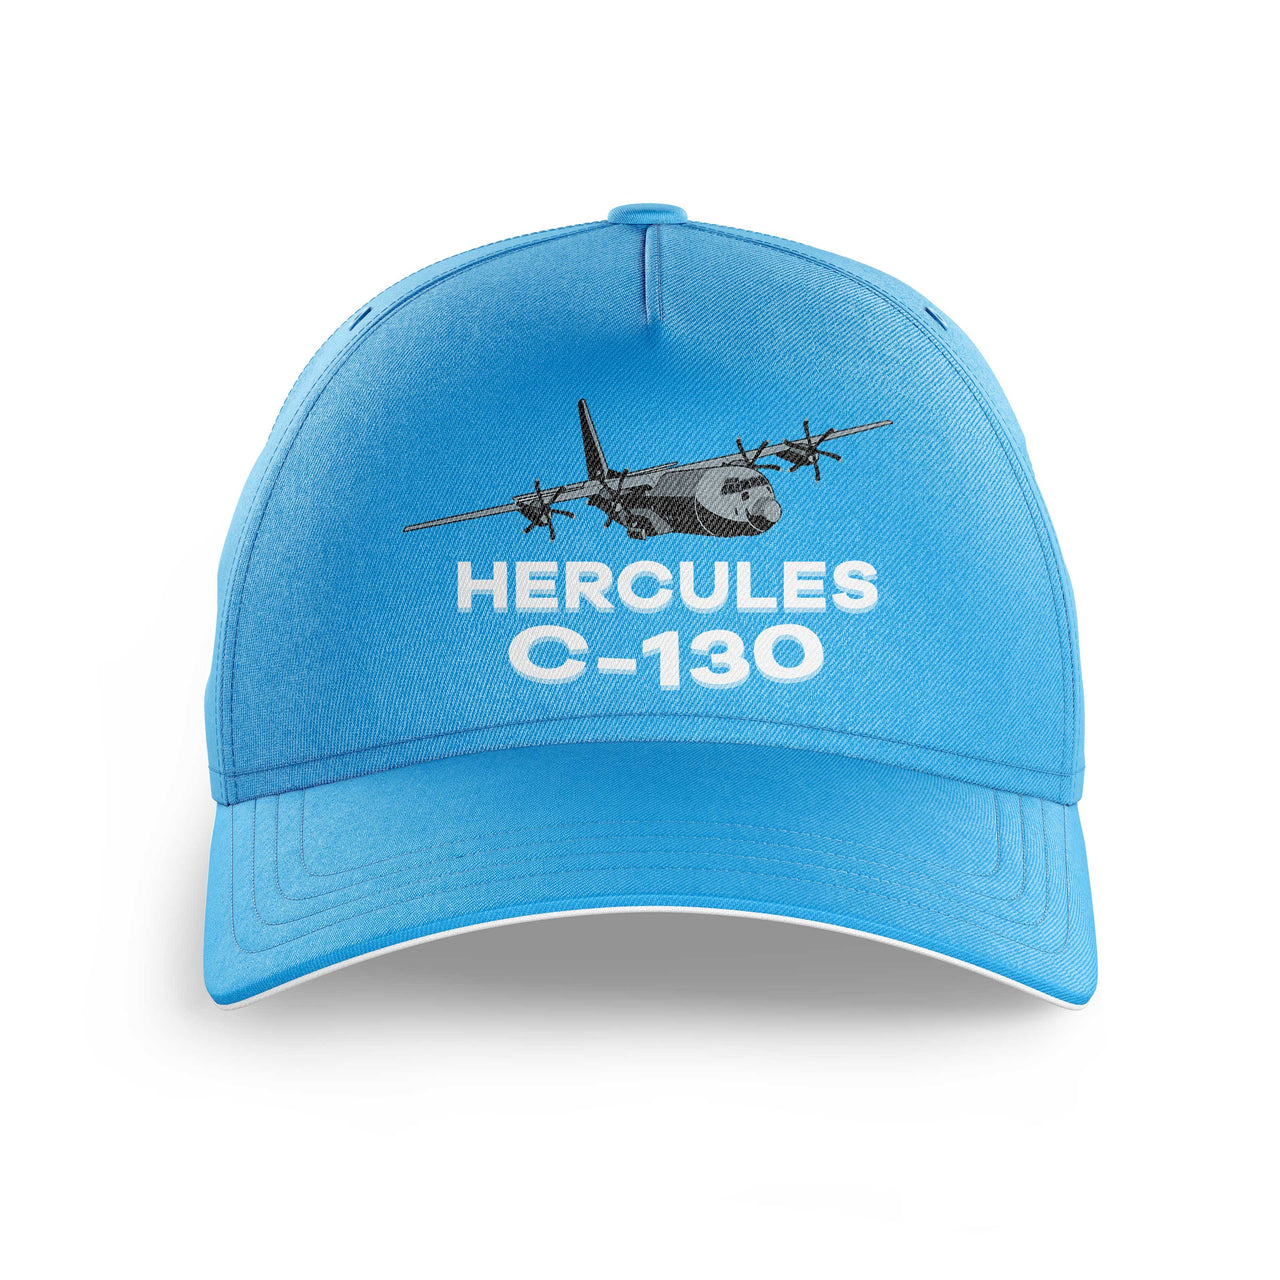 The Hercules C130 Printed Hats